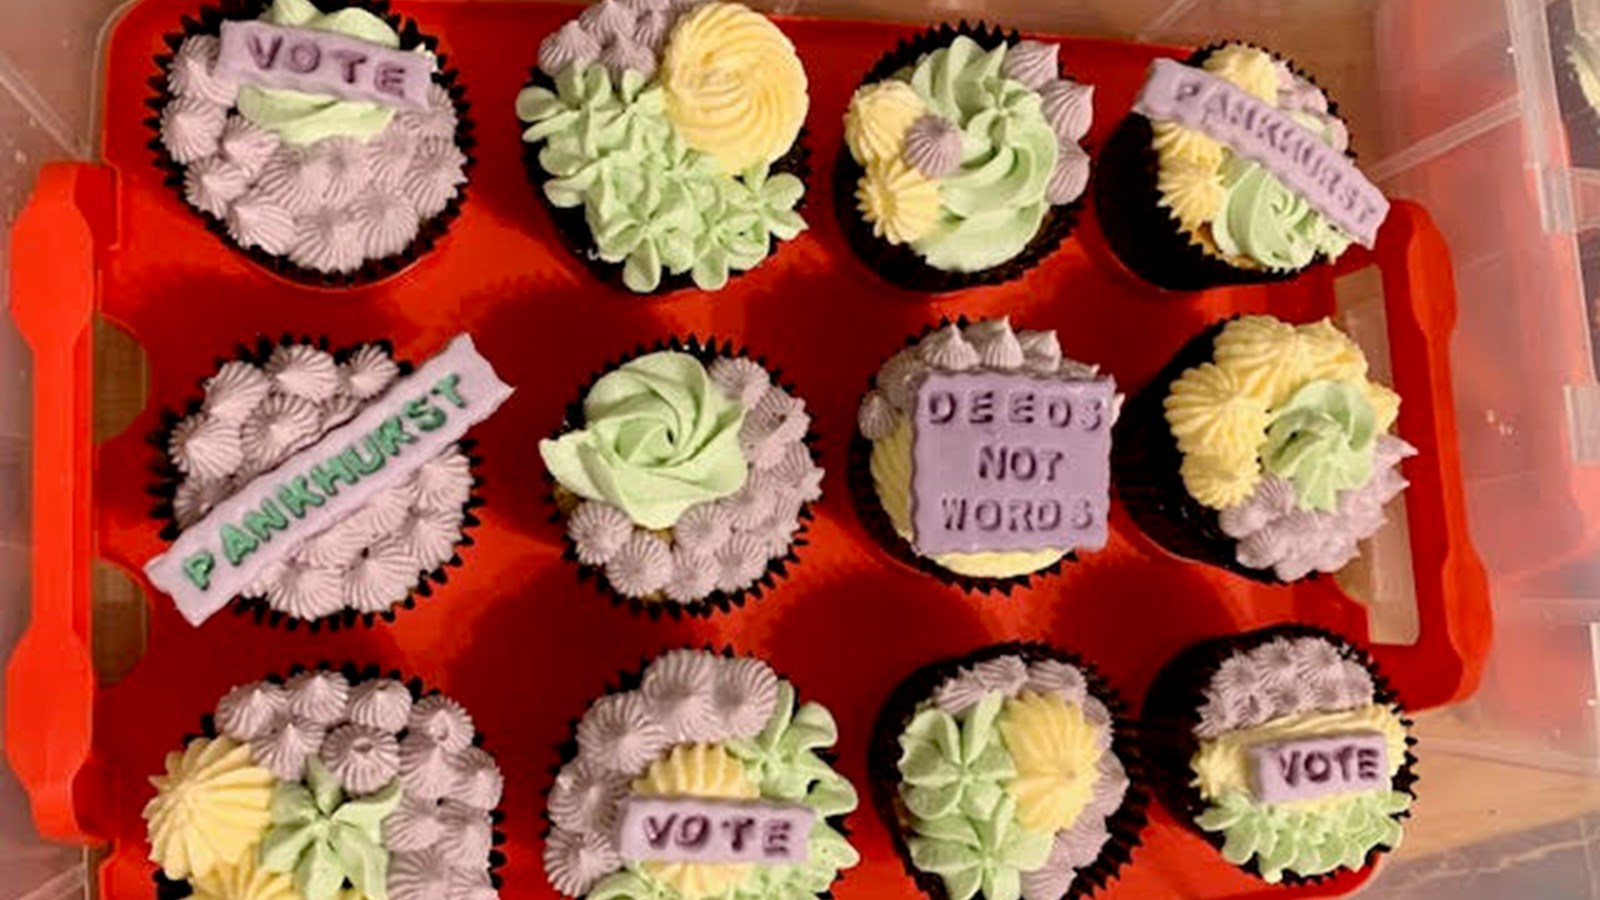 Pankhurst cakes.jpg